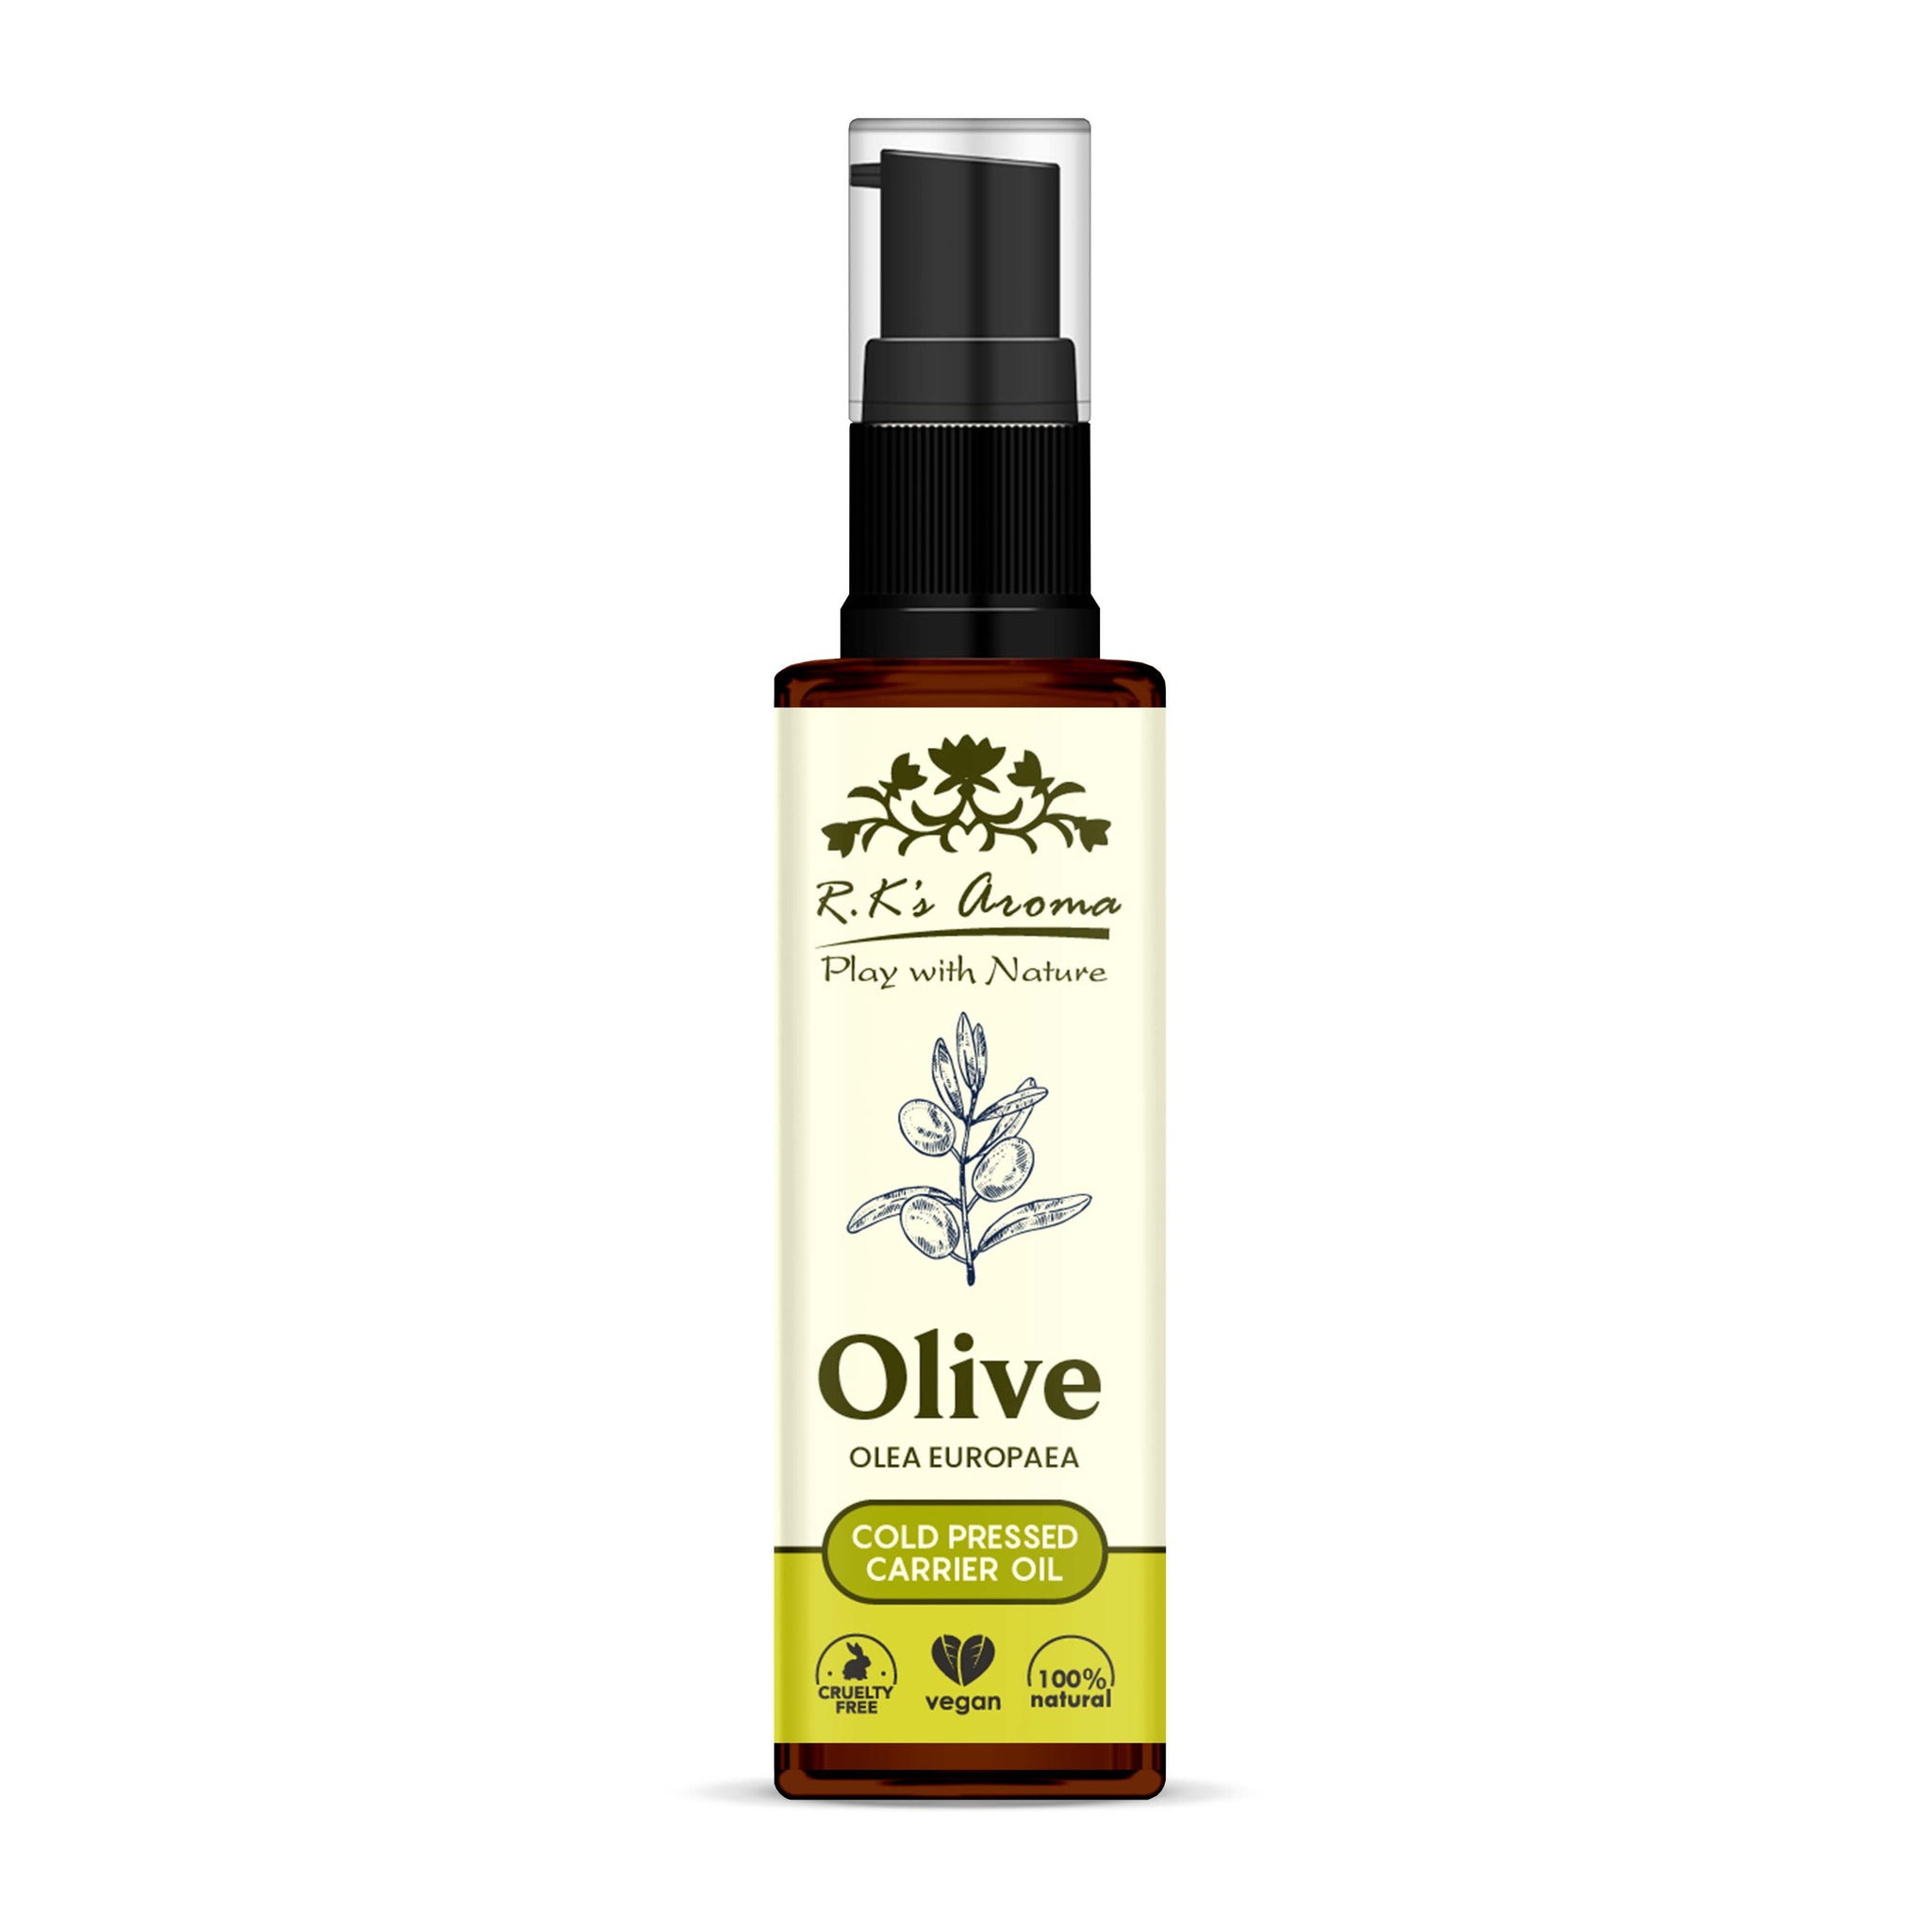 Olive Carrier Oil (Olea Europea)